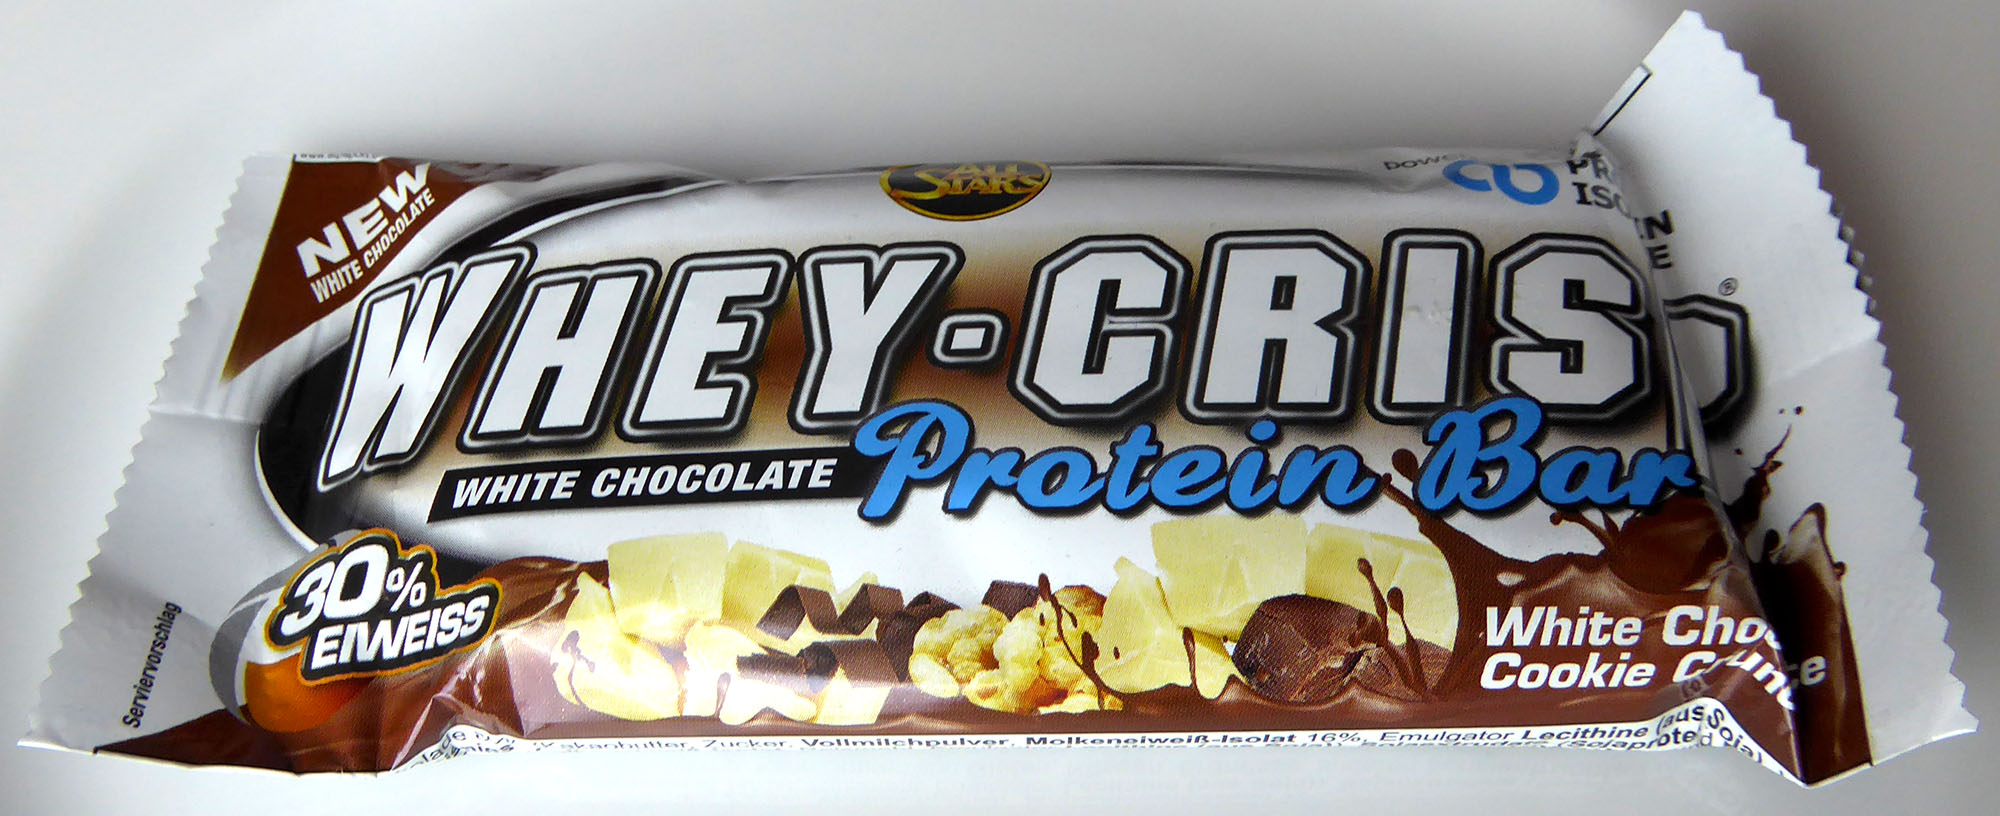 Whey Crisp White Chocolate Protein Bar